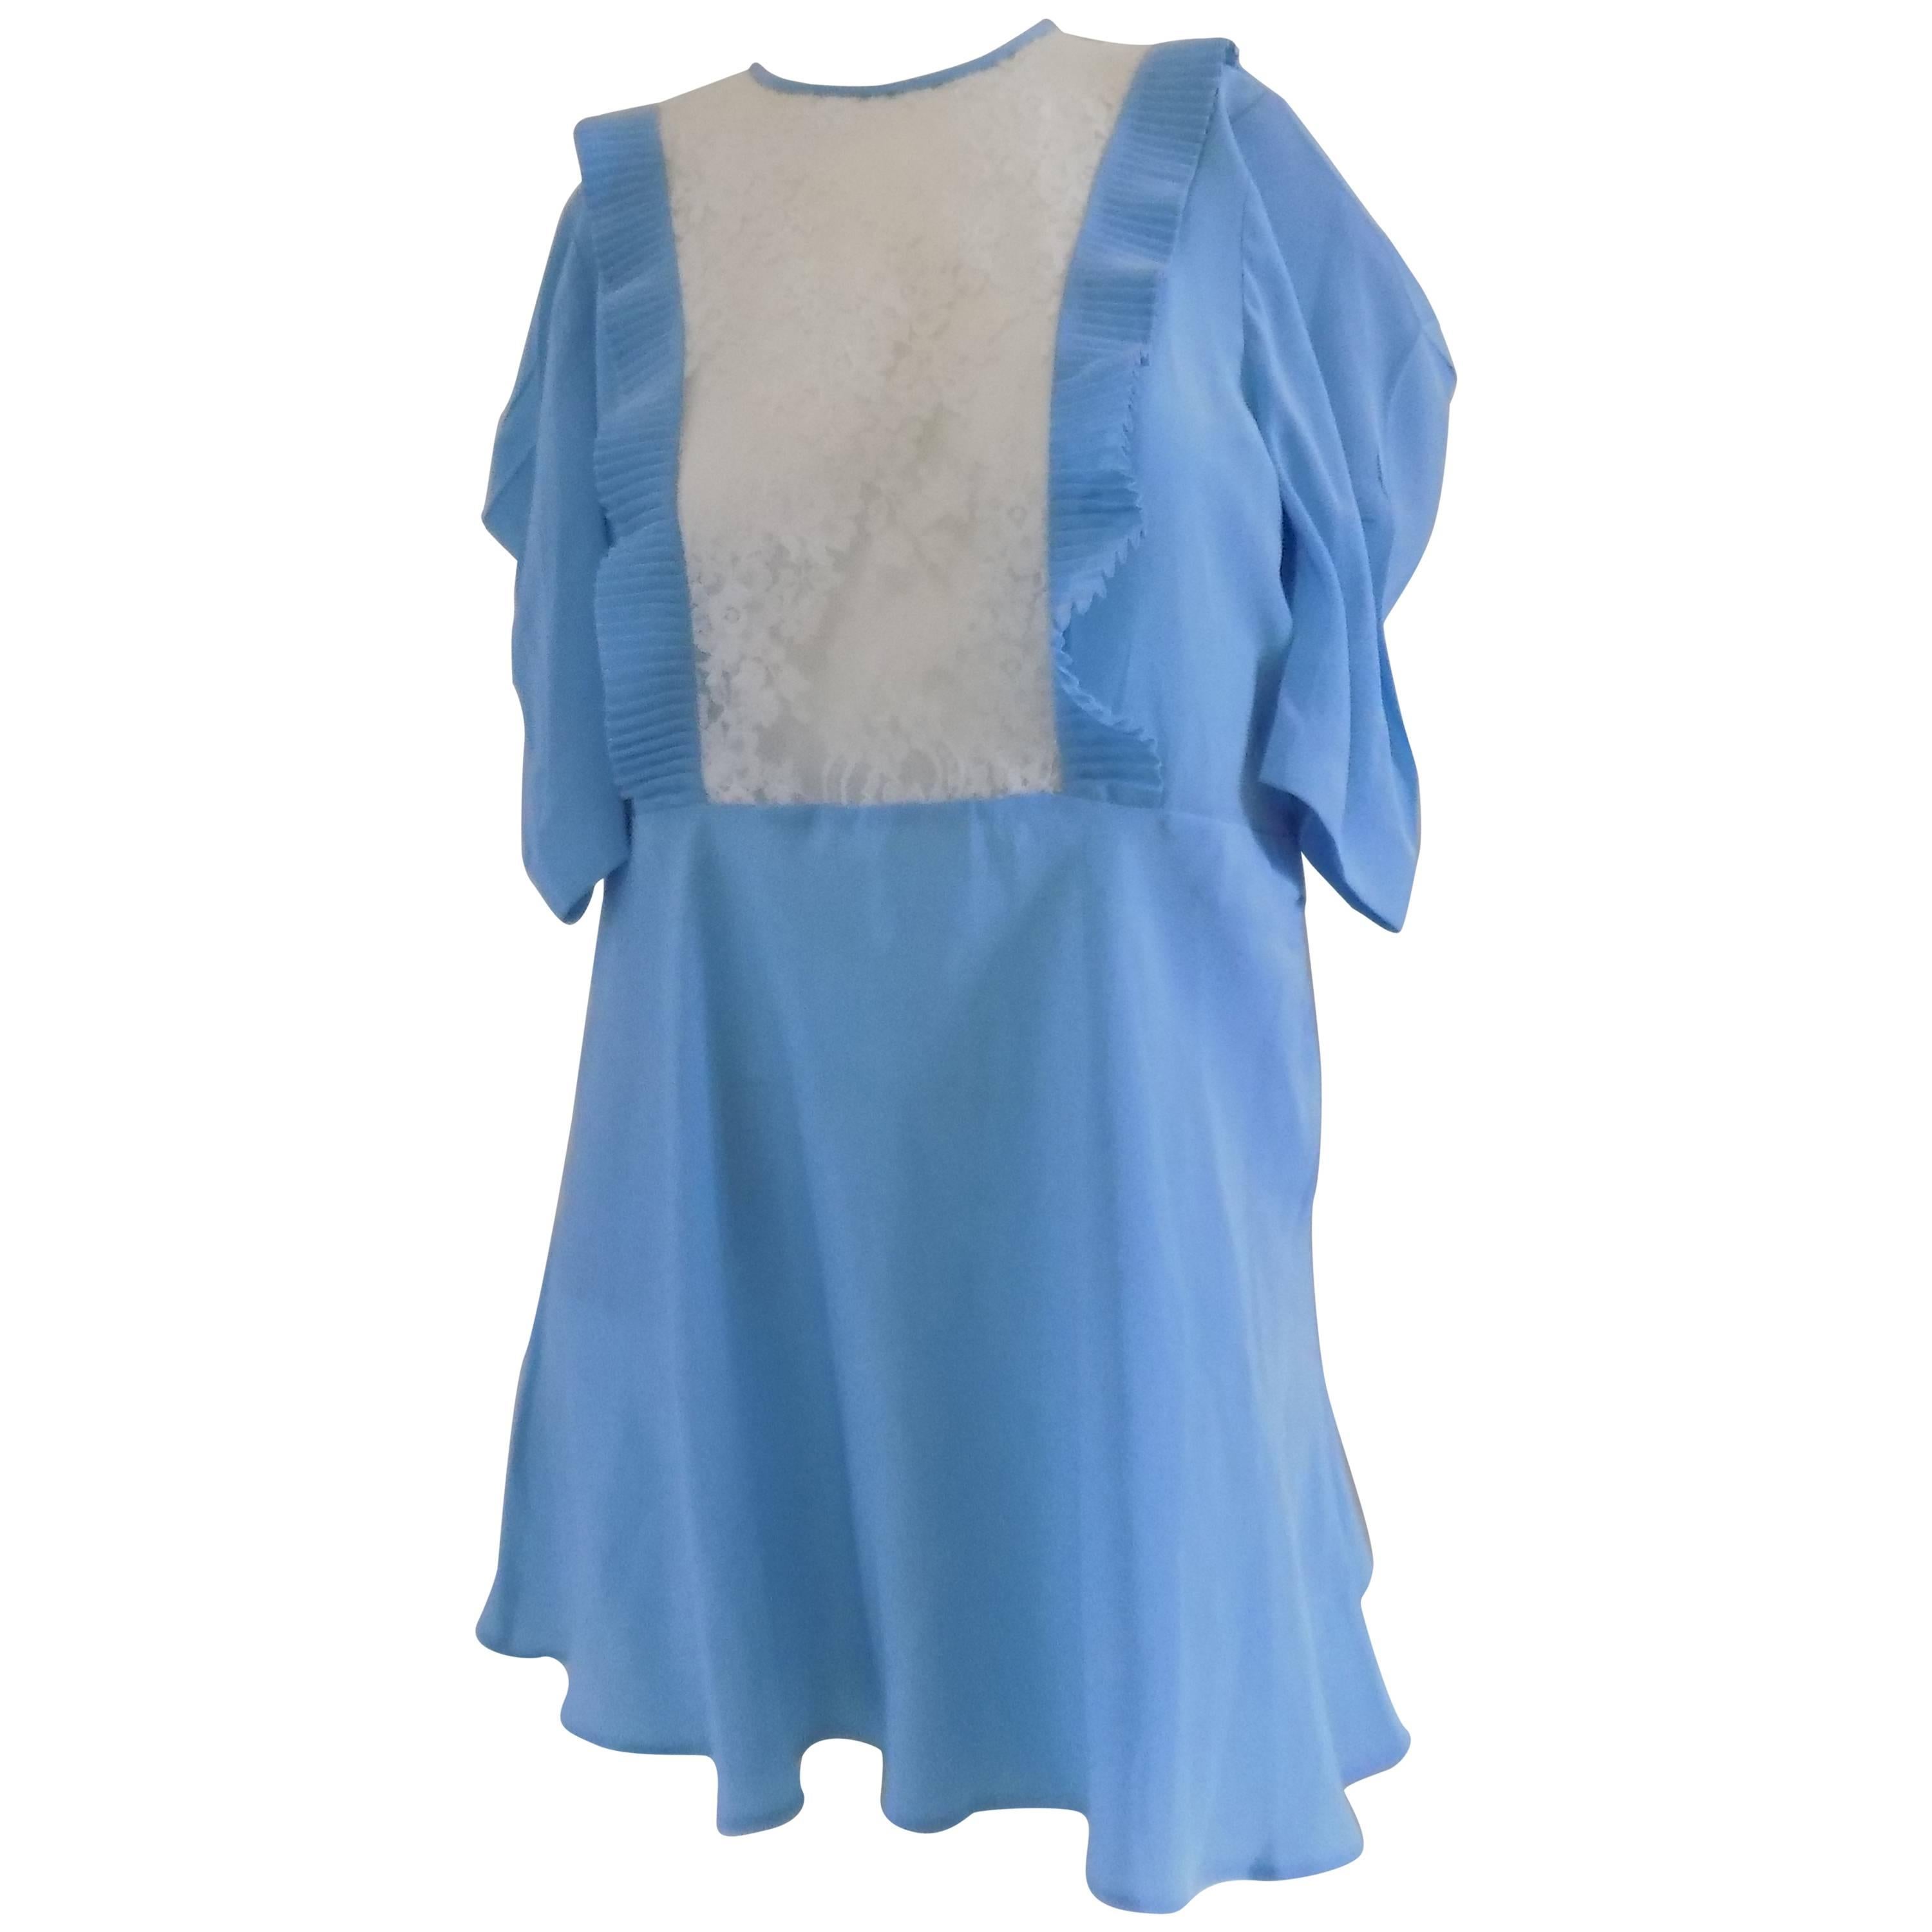 Miu Miu Light blue dress